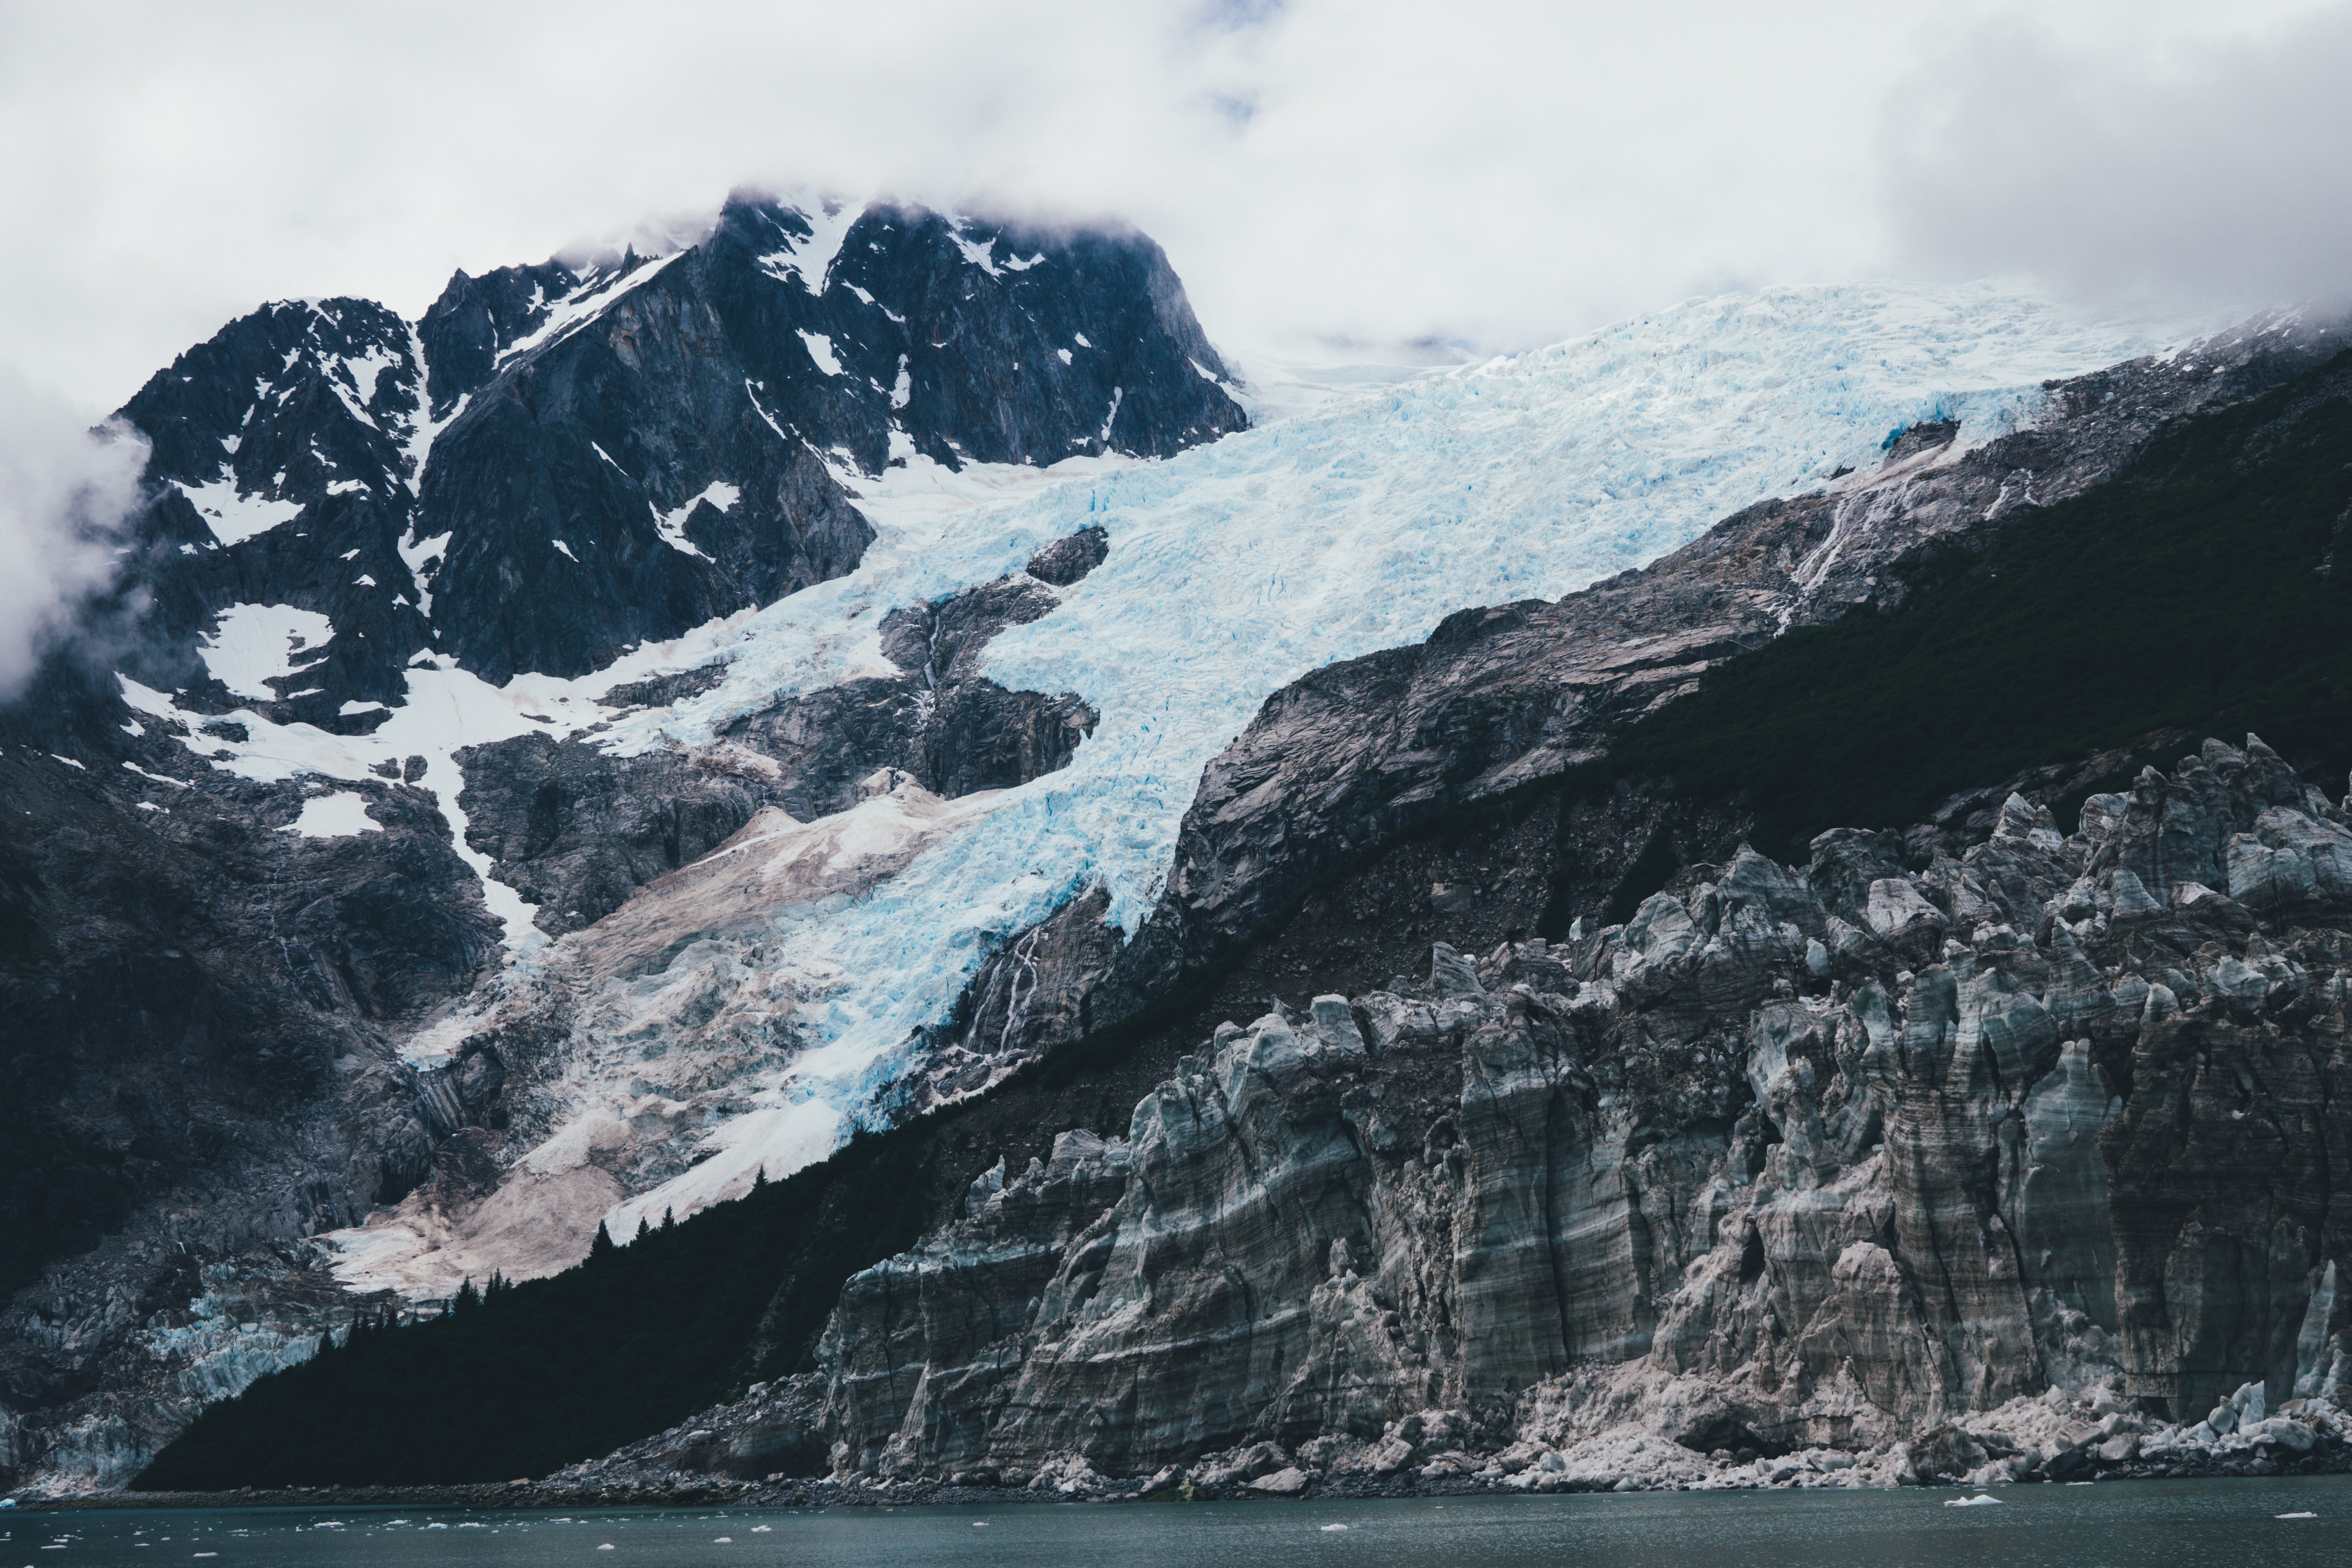 rocky glacier mountain near body of water